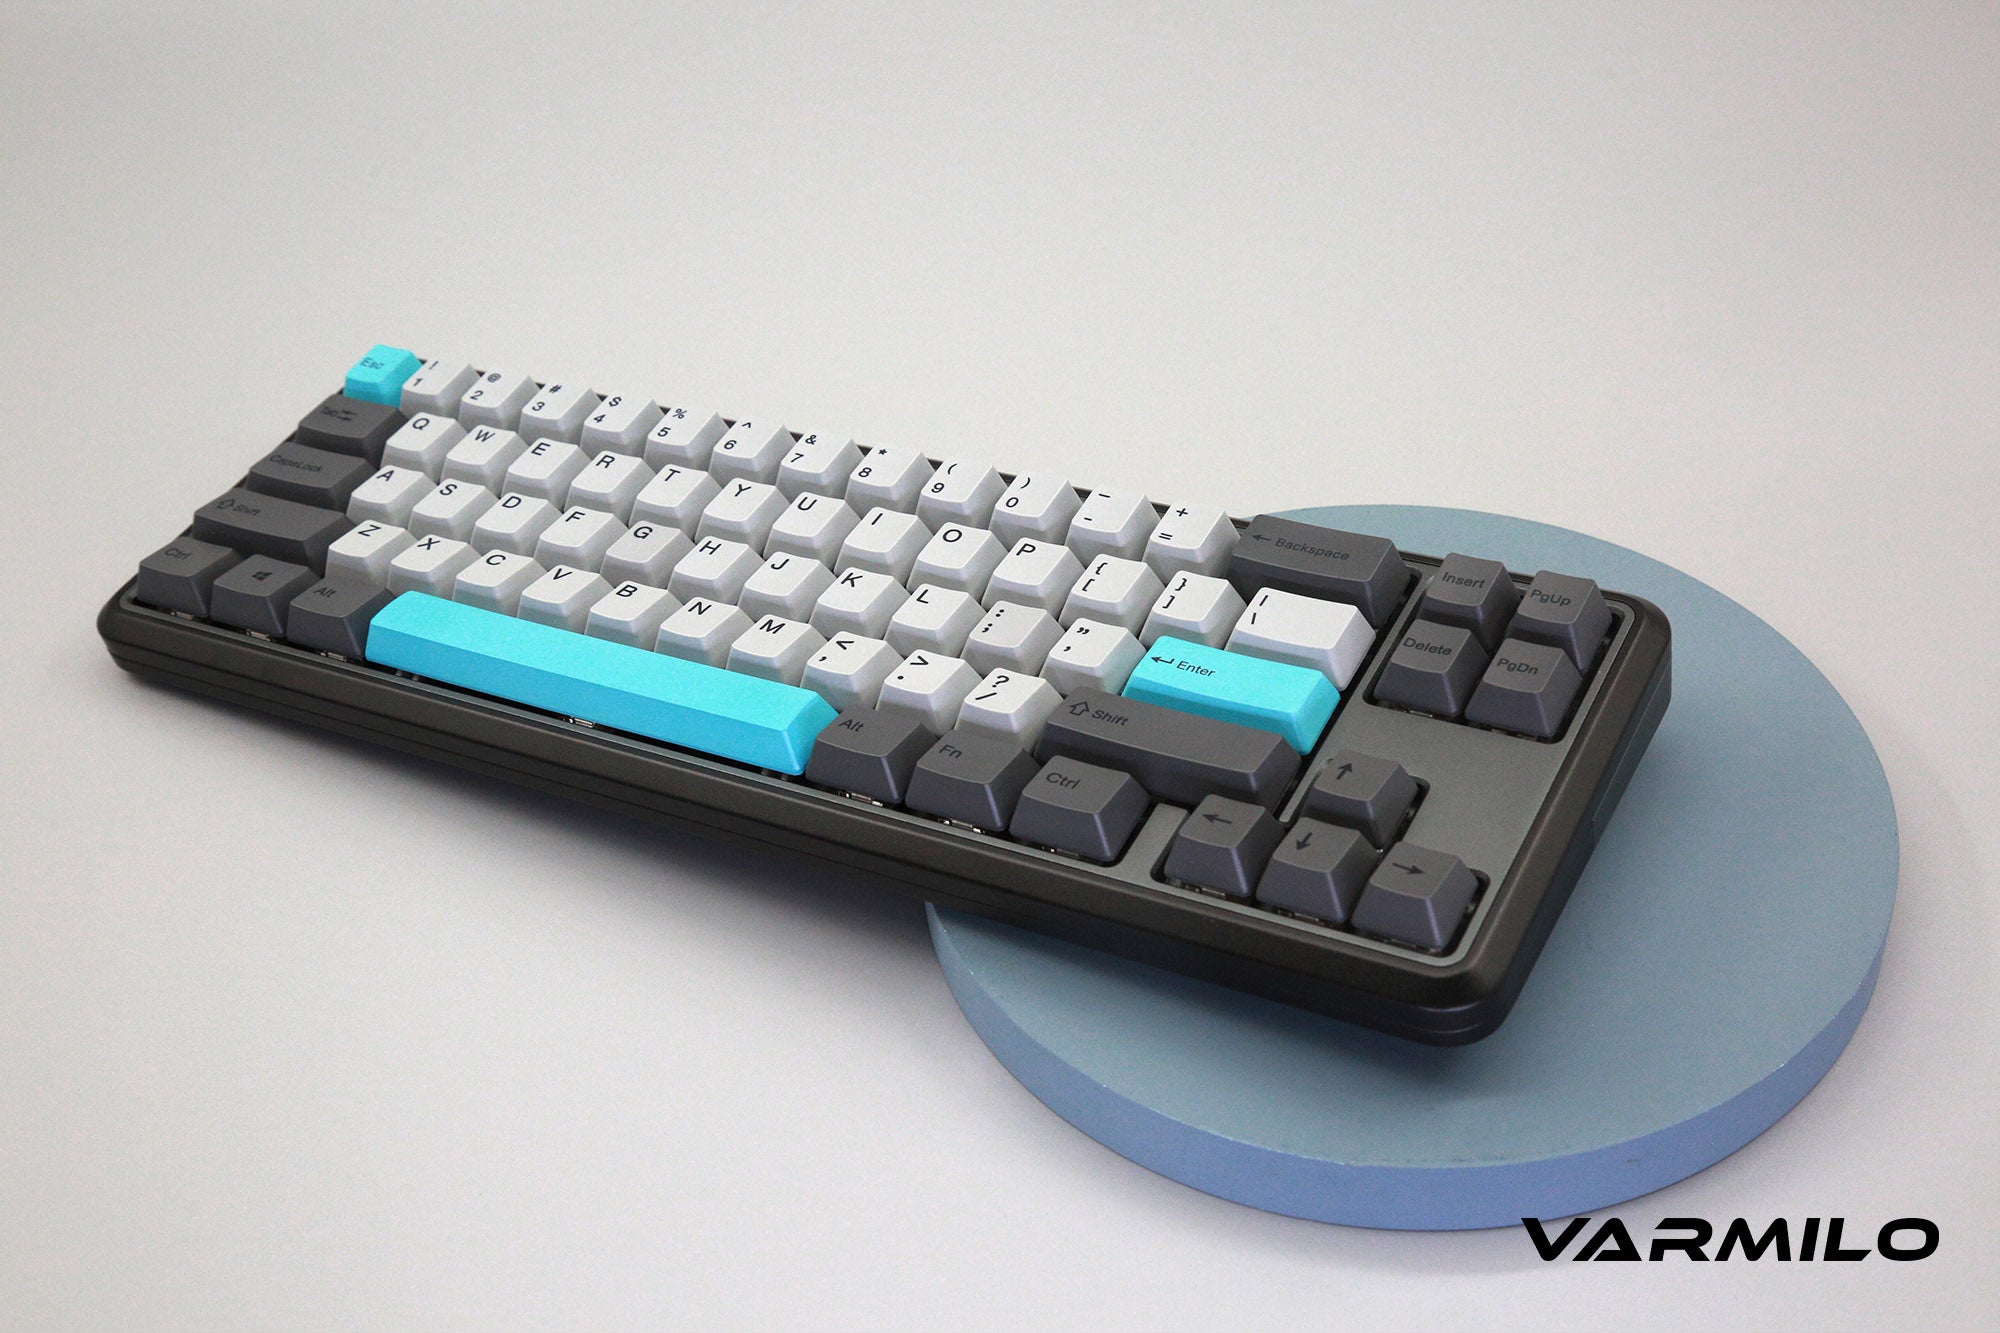 Varmilo Sword 2-68 Moonlight 65% Mechanical Keyboard